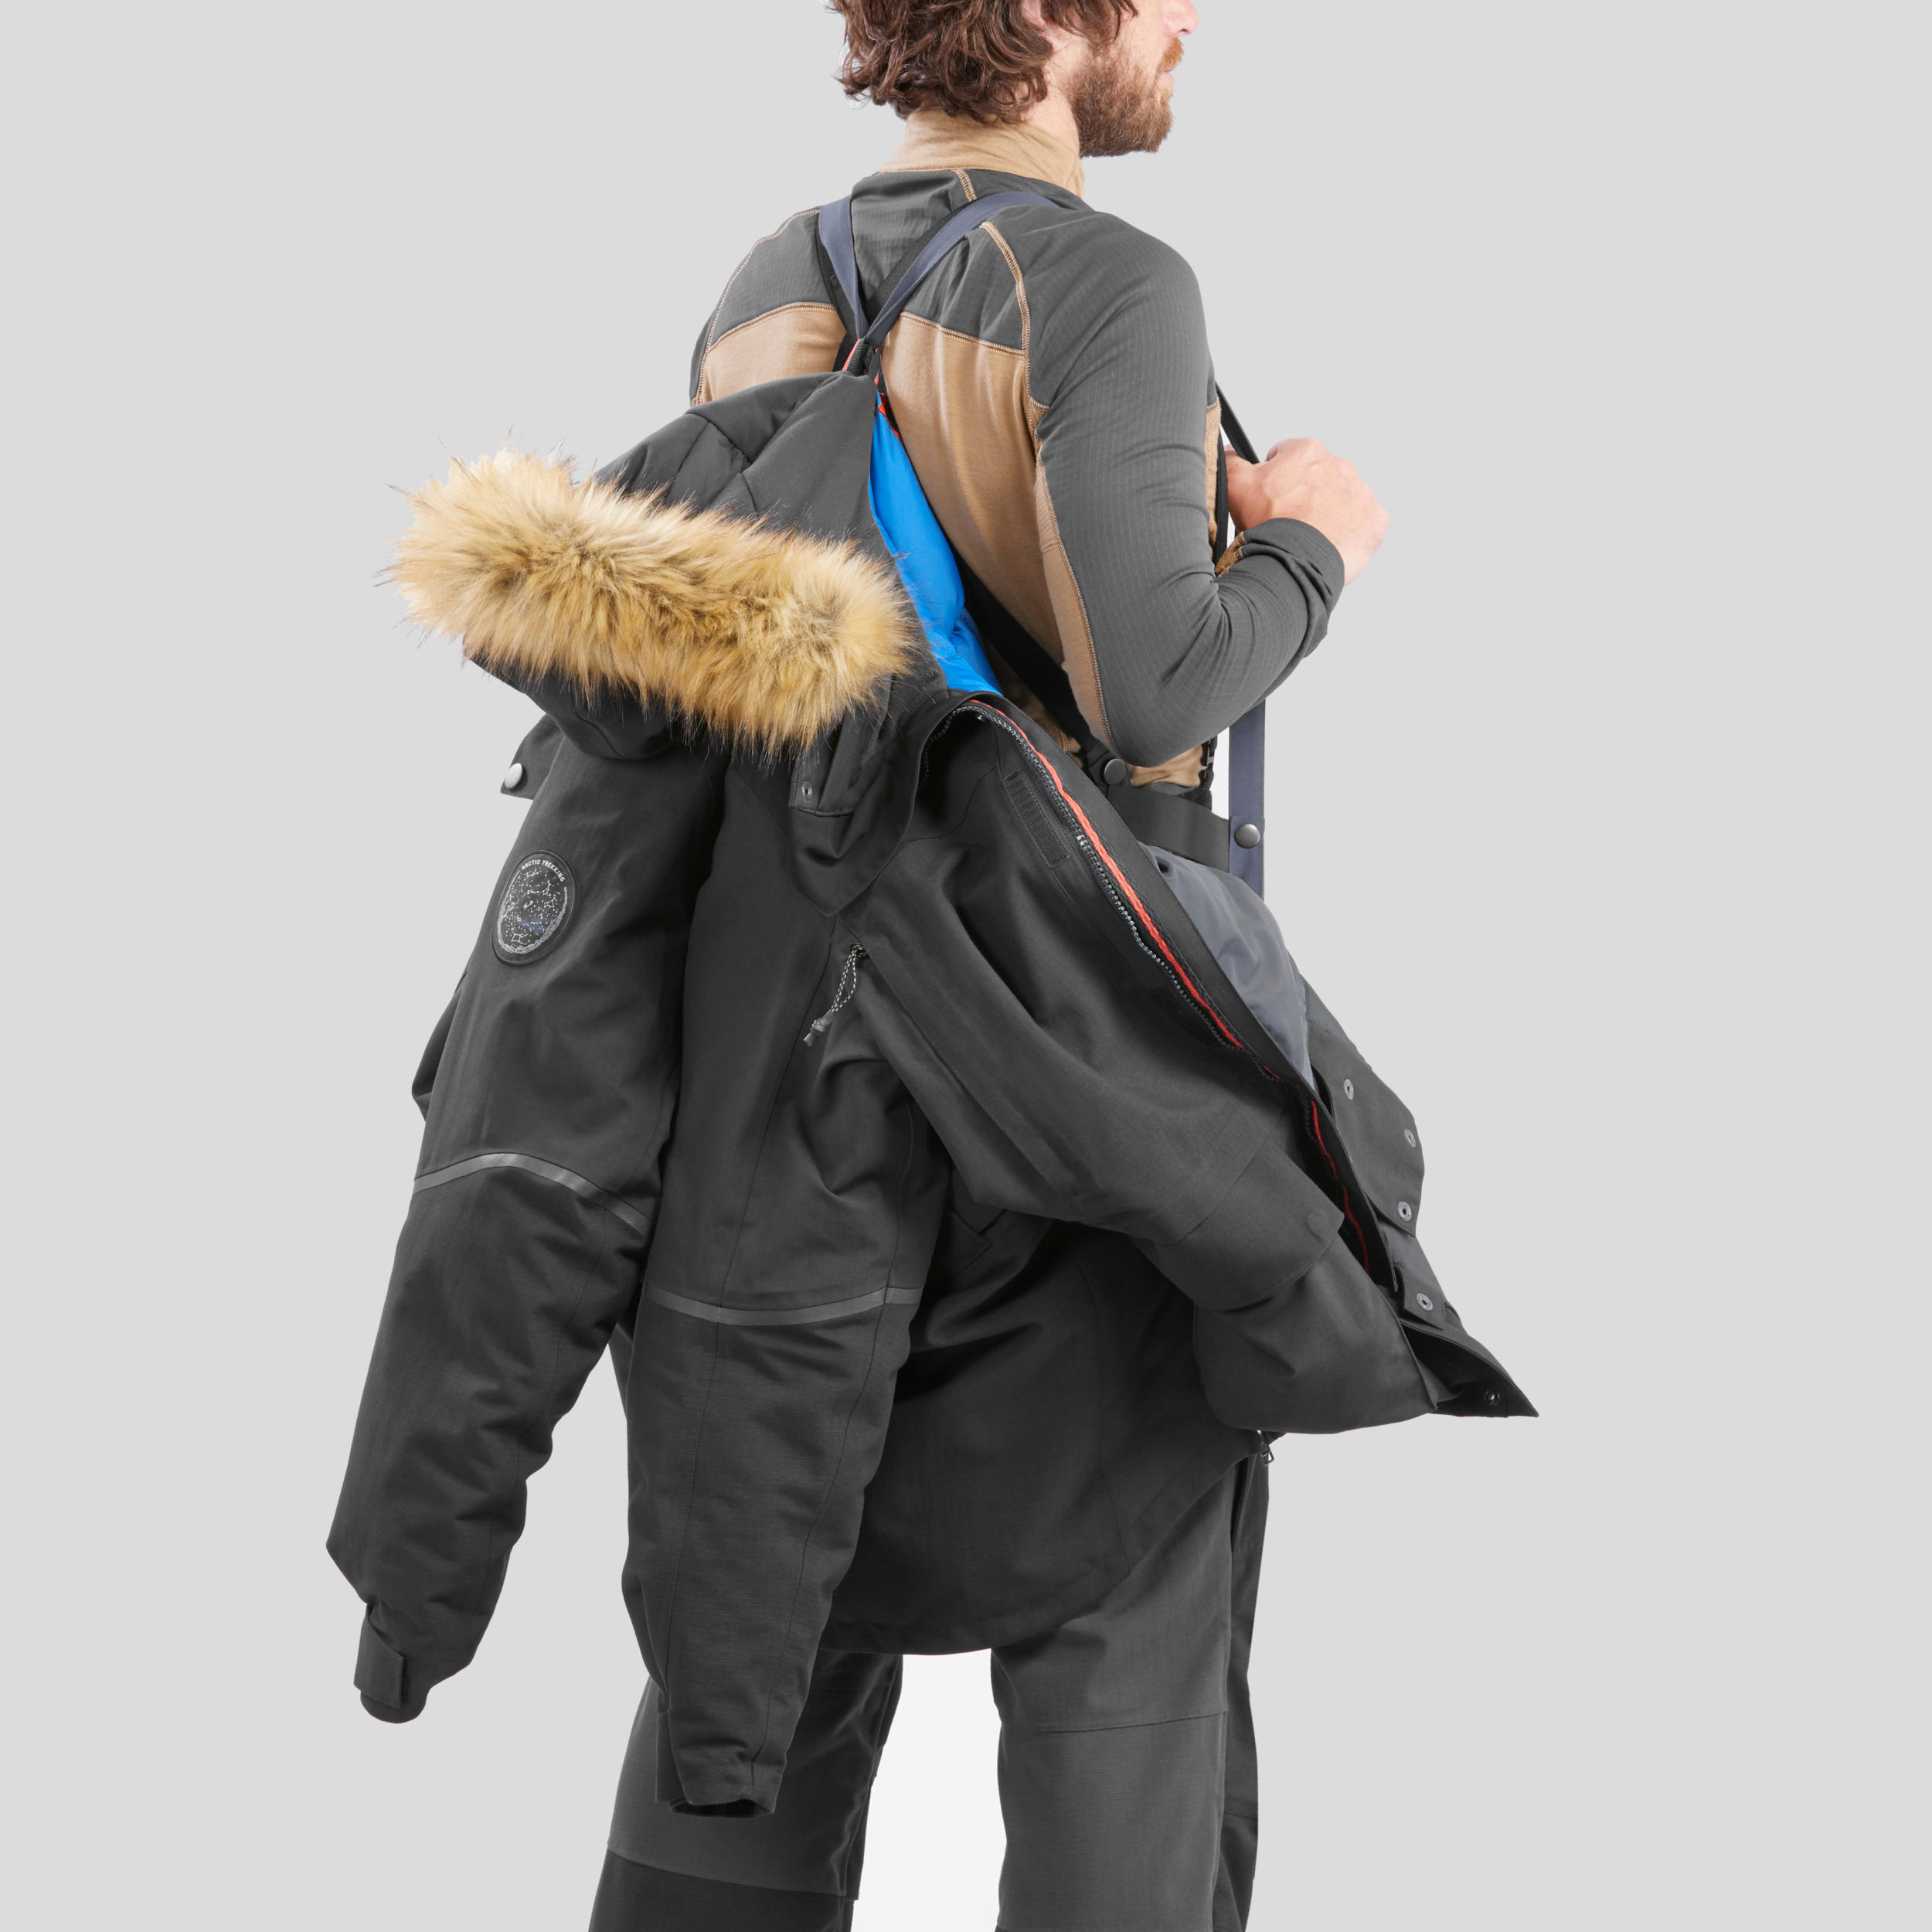 Unisex waterproof parka jacket - 900 - Black 16/21